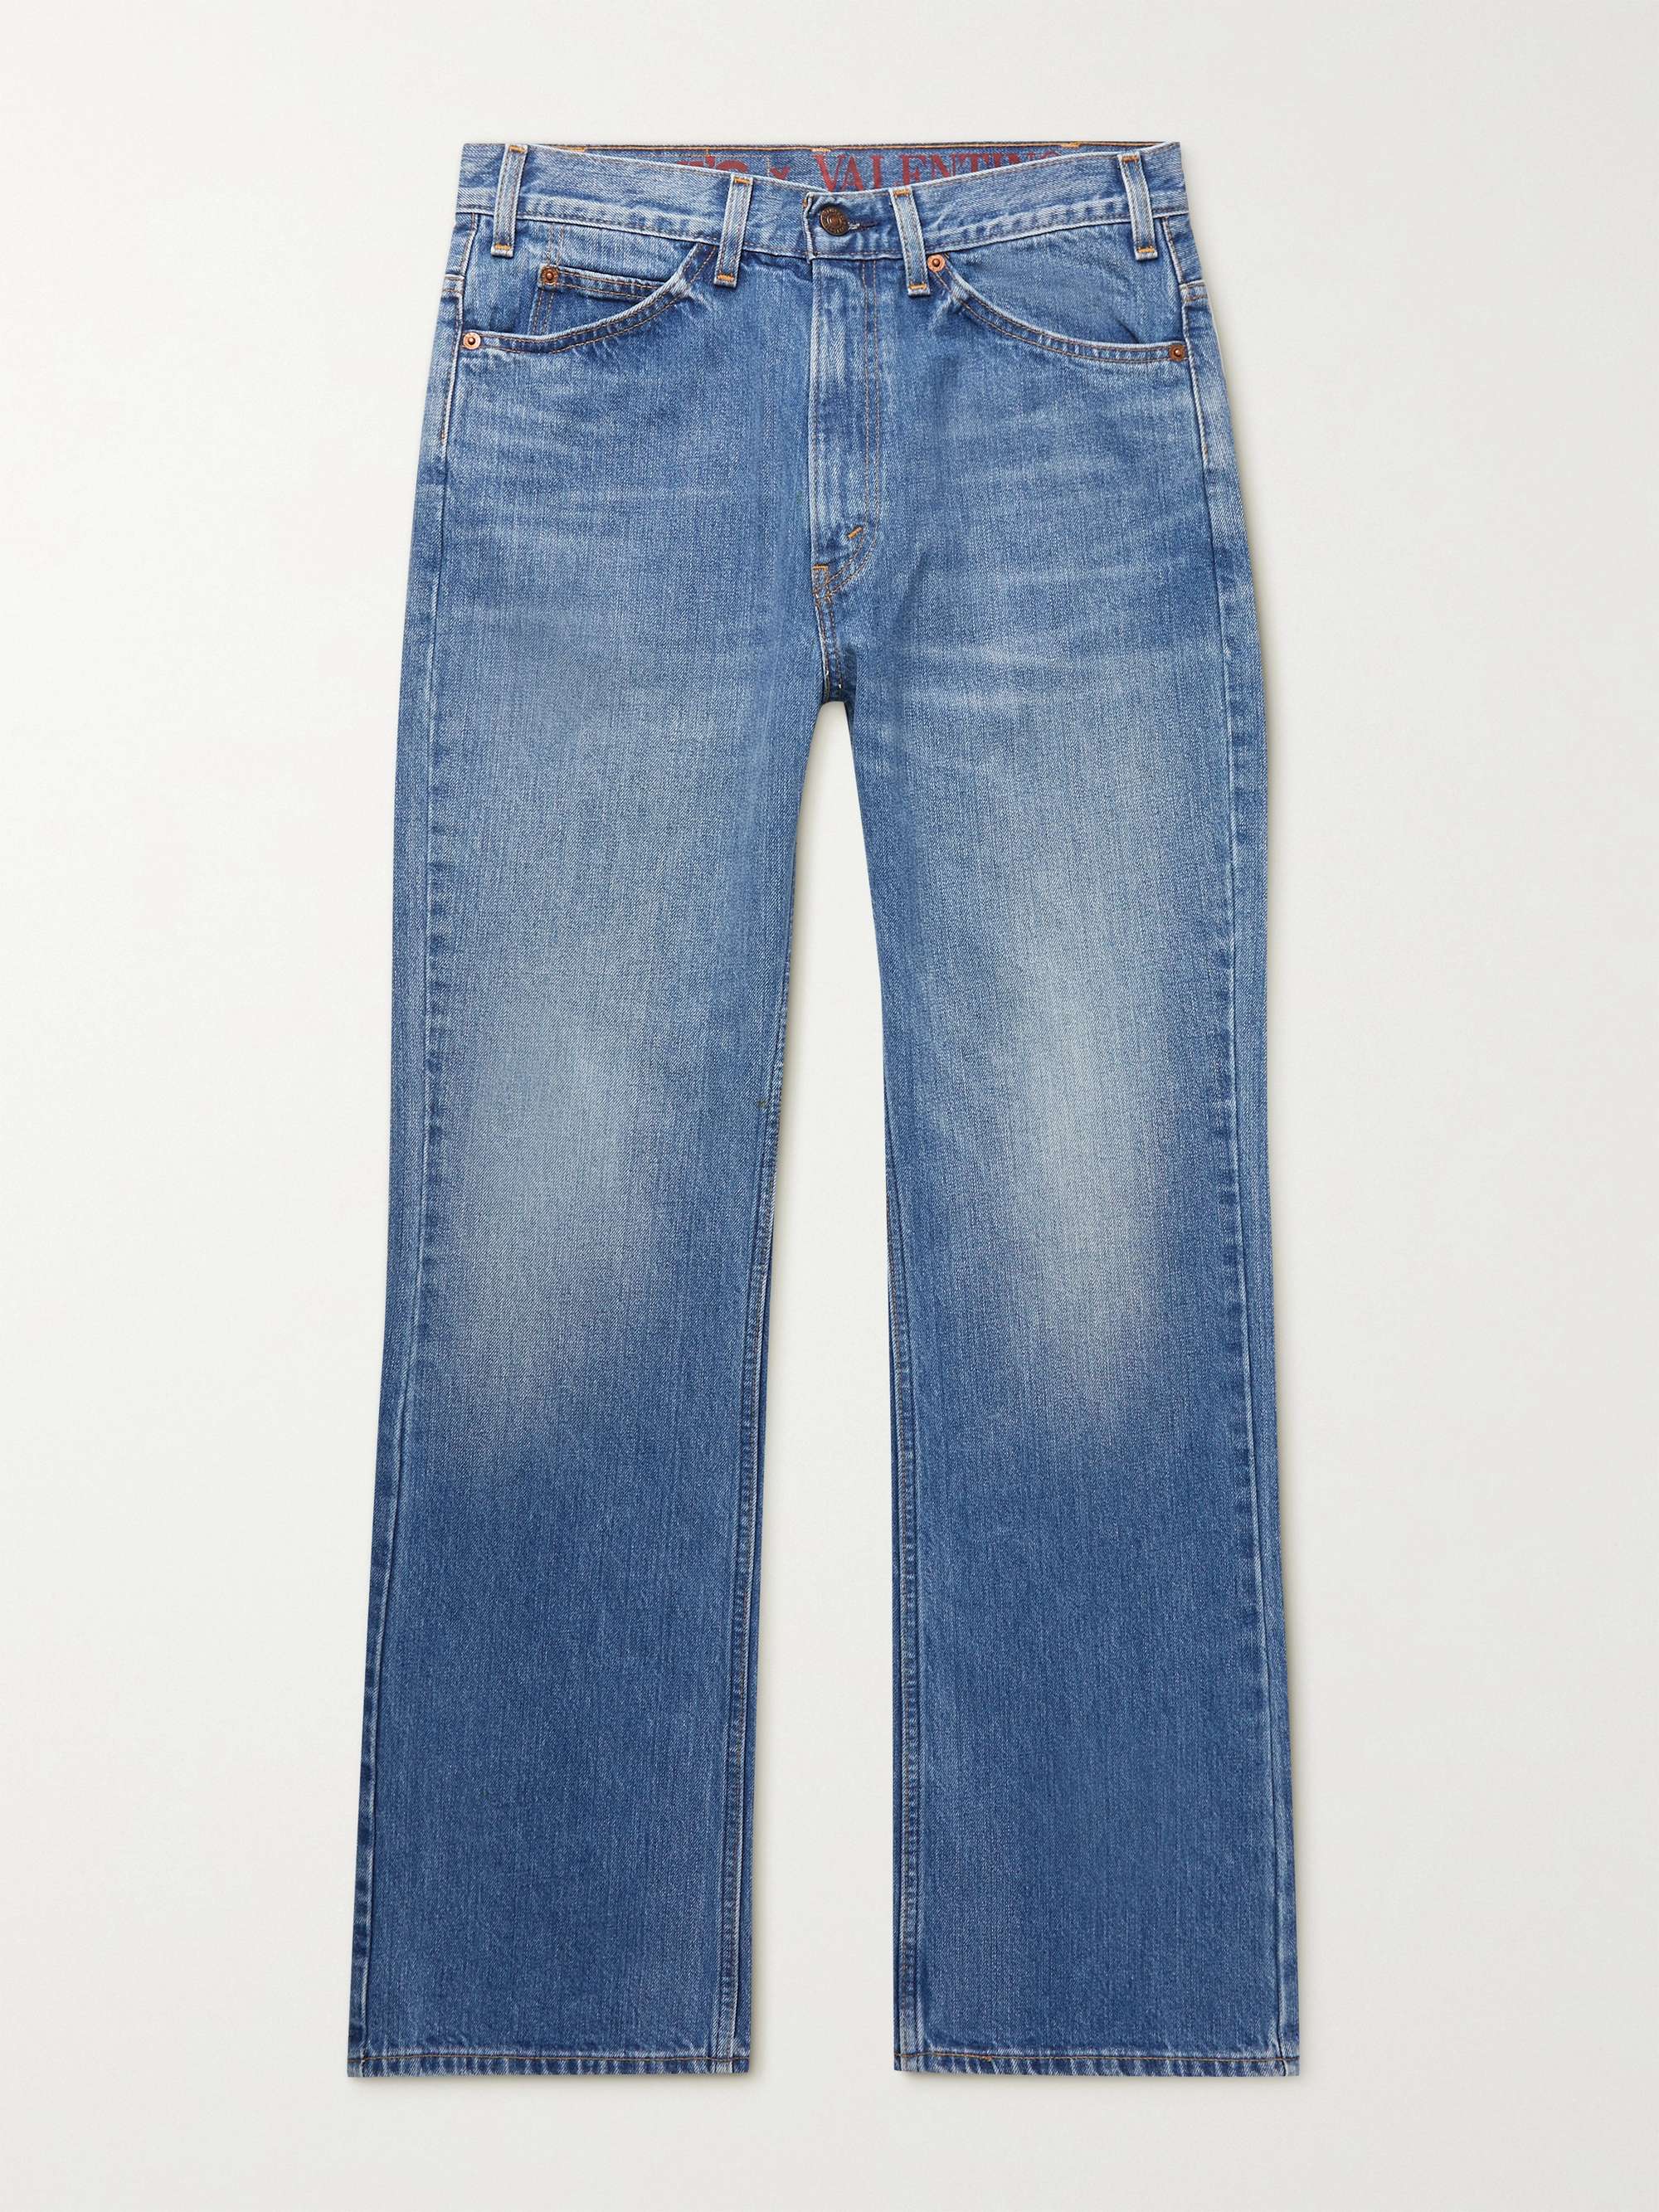 VALENTINO + Levi's RE-EDITION 517 Denim Jeans